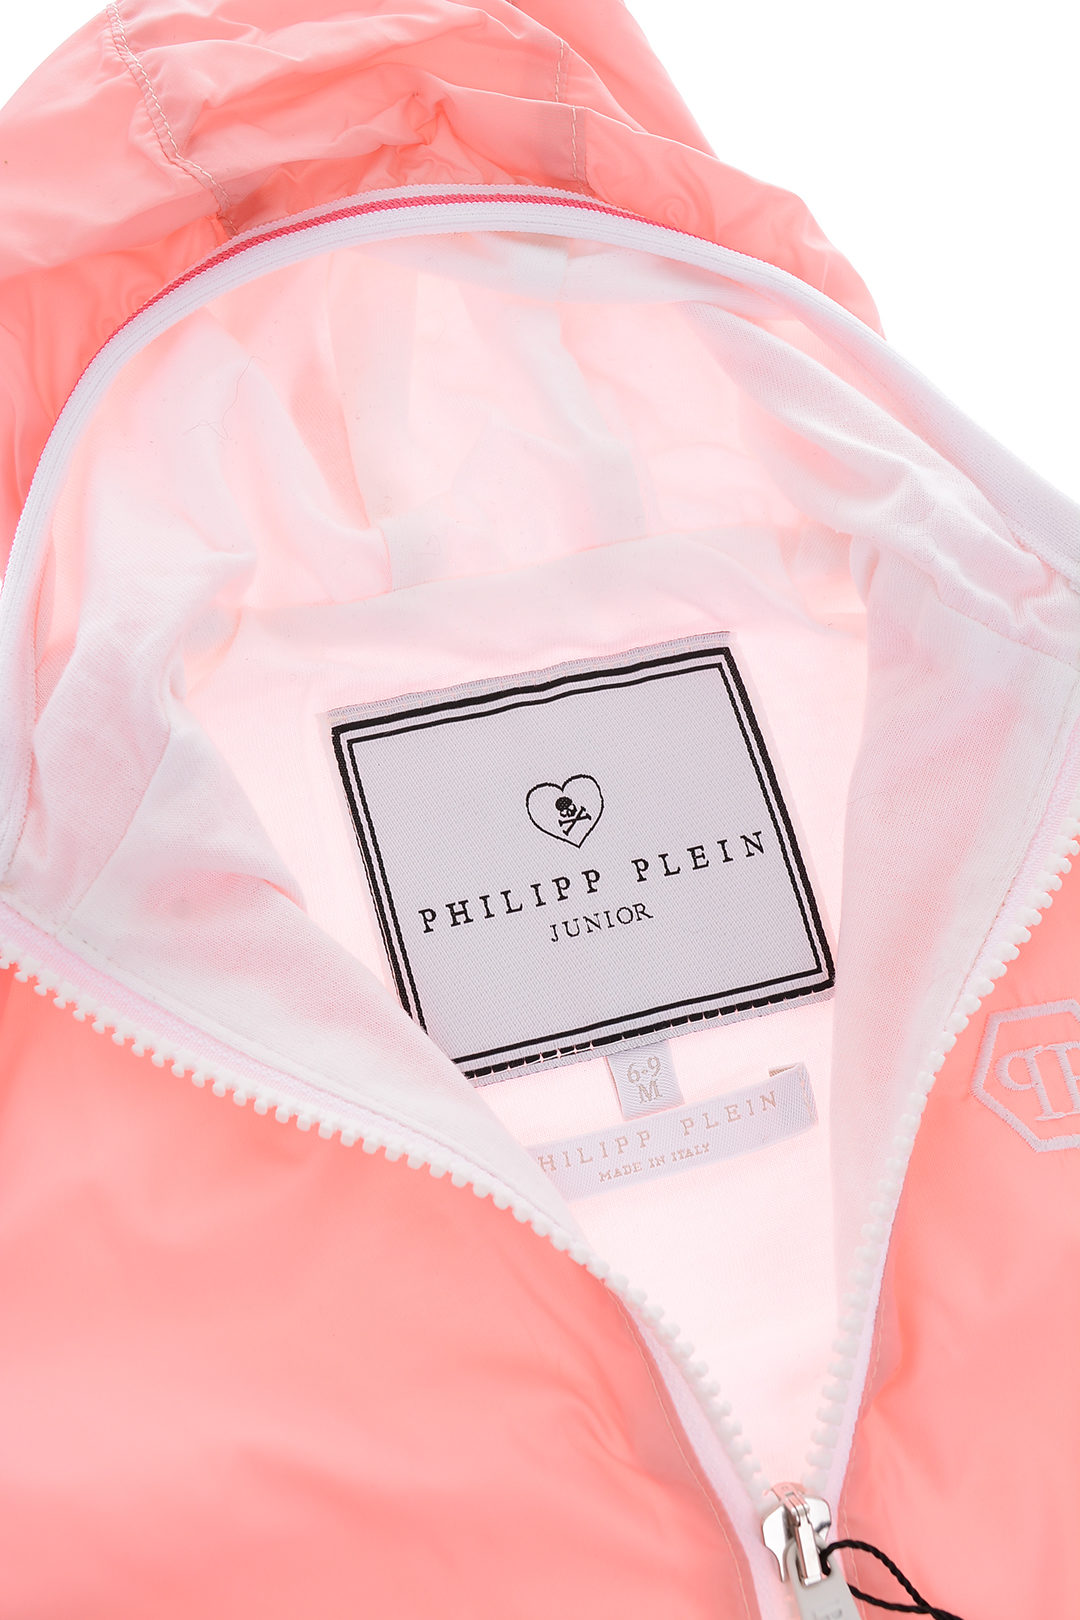 Philipp Plein Flock Money Amila hoodie - StclaircomoShops - Wadding Puffer  Jacket Unisex Pink Nylon Hooded Puffer Jacket